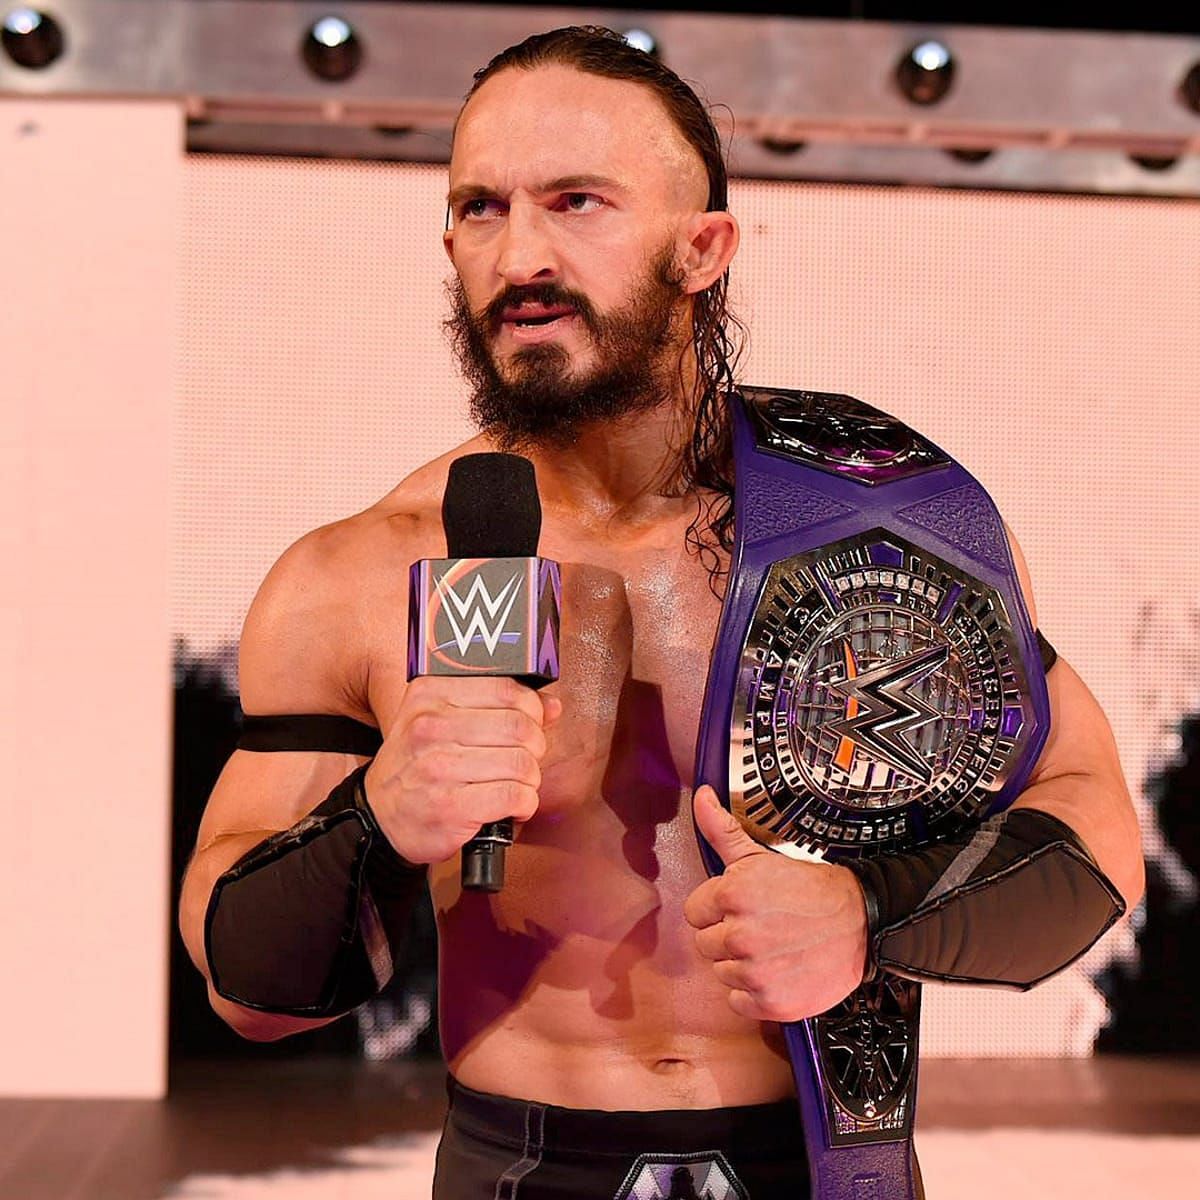 Neville spent six years in WWE